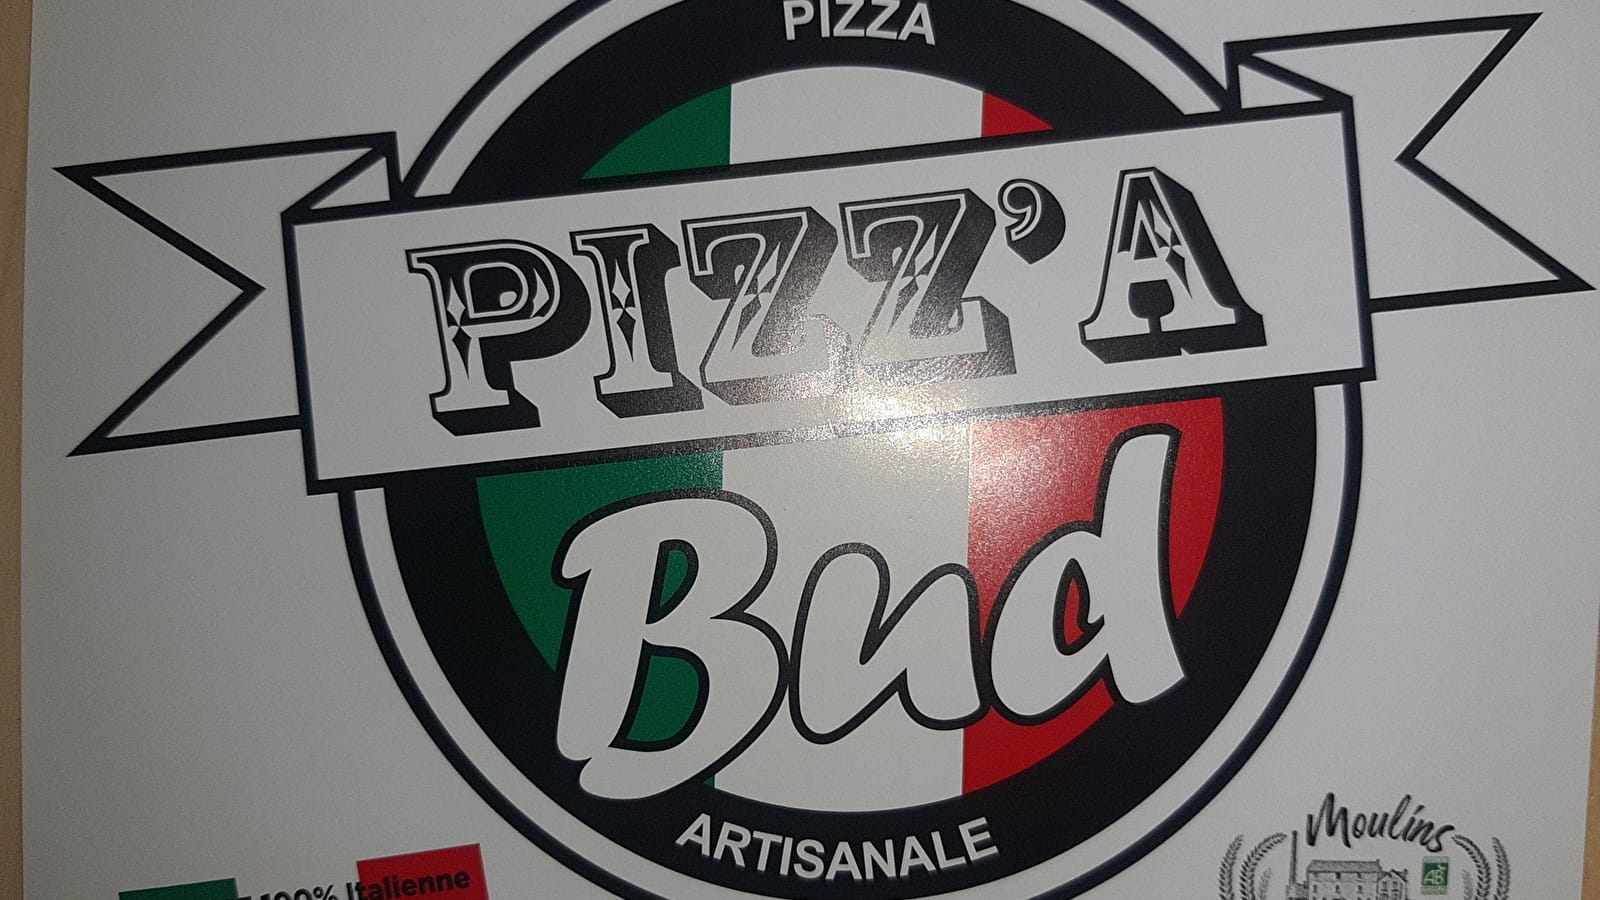 Pizz'a Bud